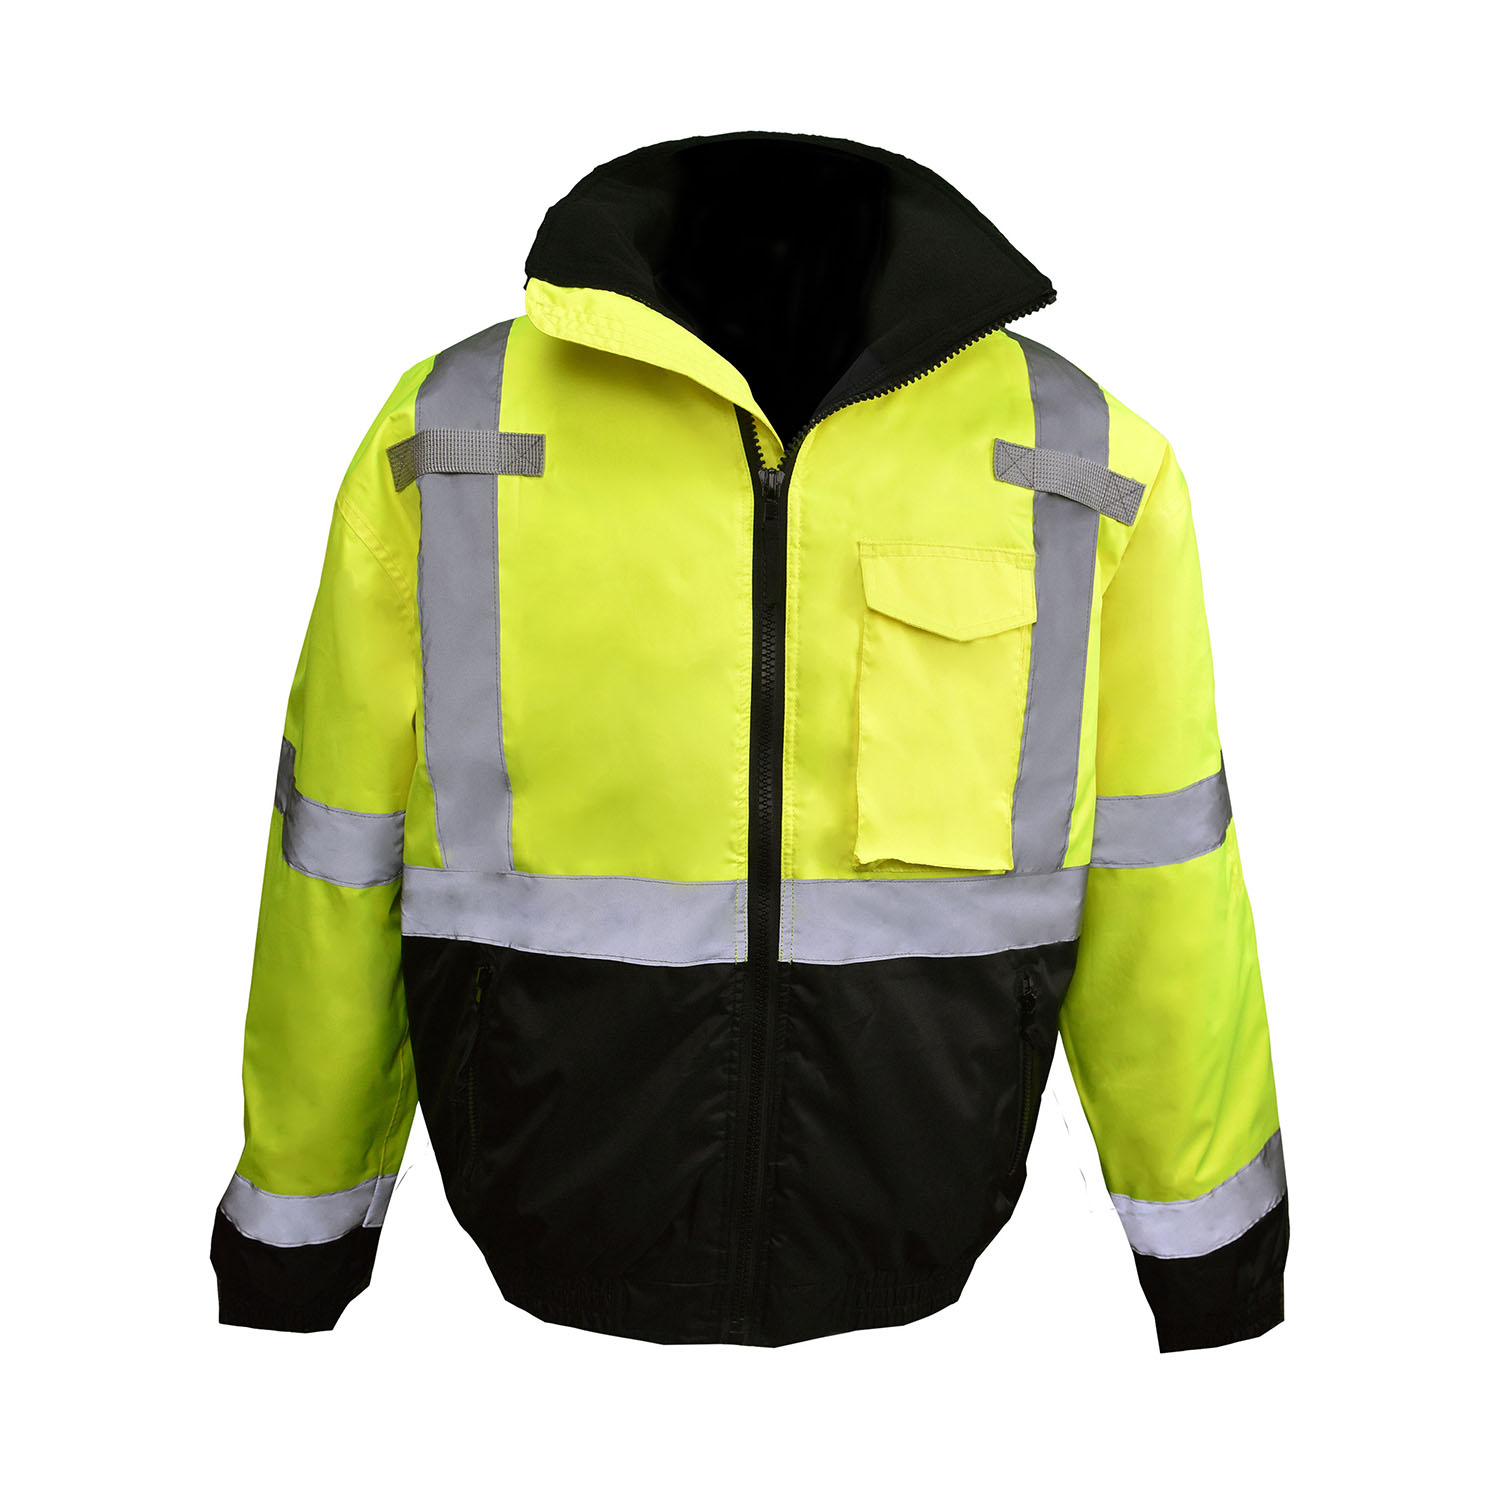 Radians SJ11QB Men's Reflective Winter Safety Jacket iWantWorkwear